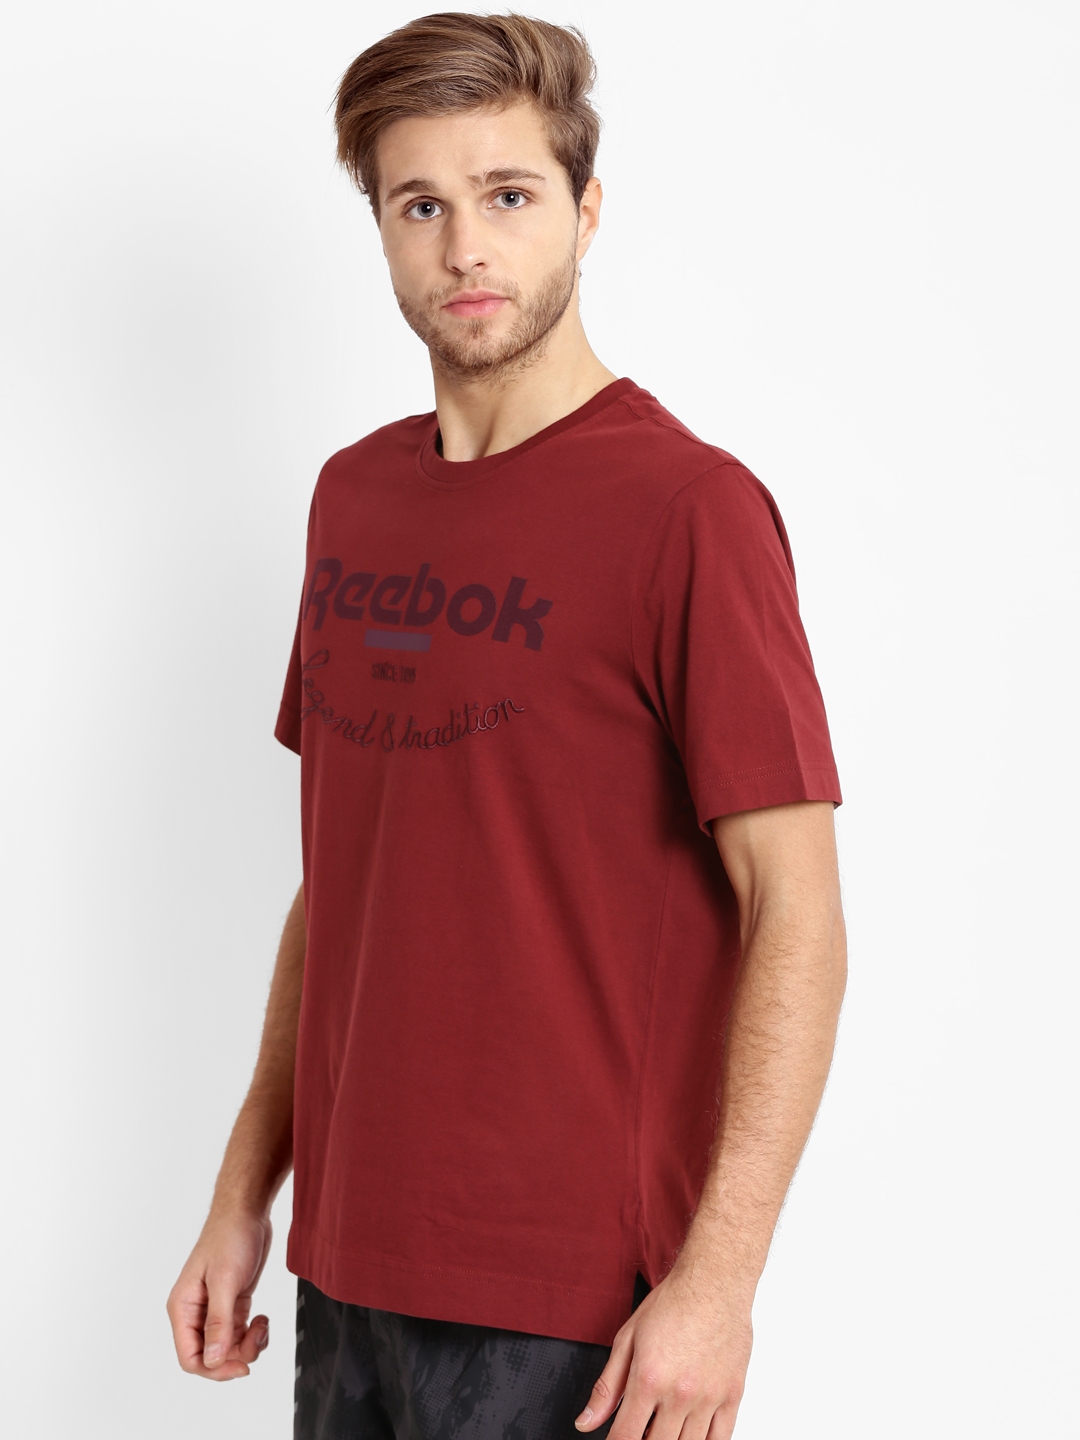 reebok classic t shirts mens 2016